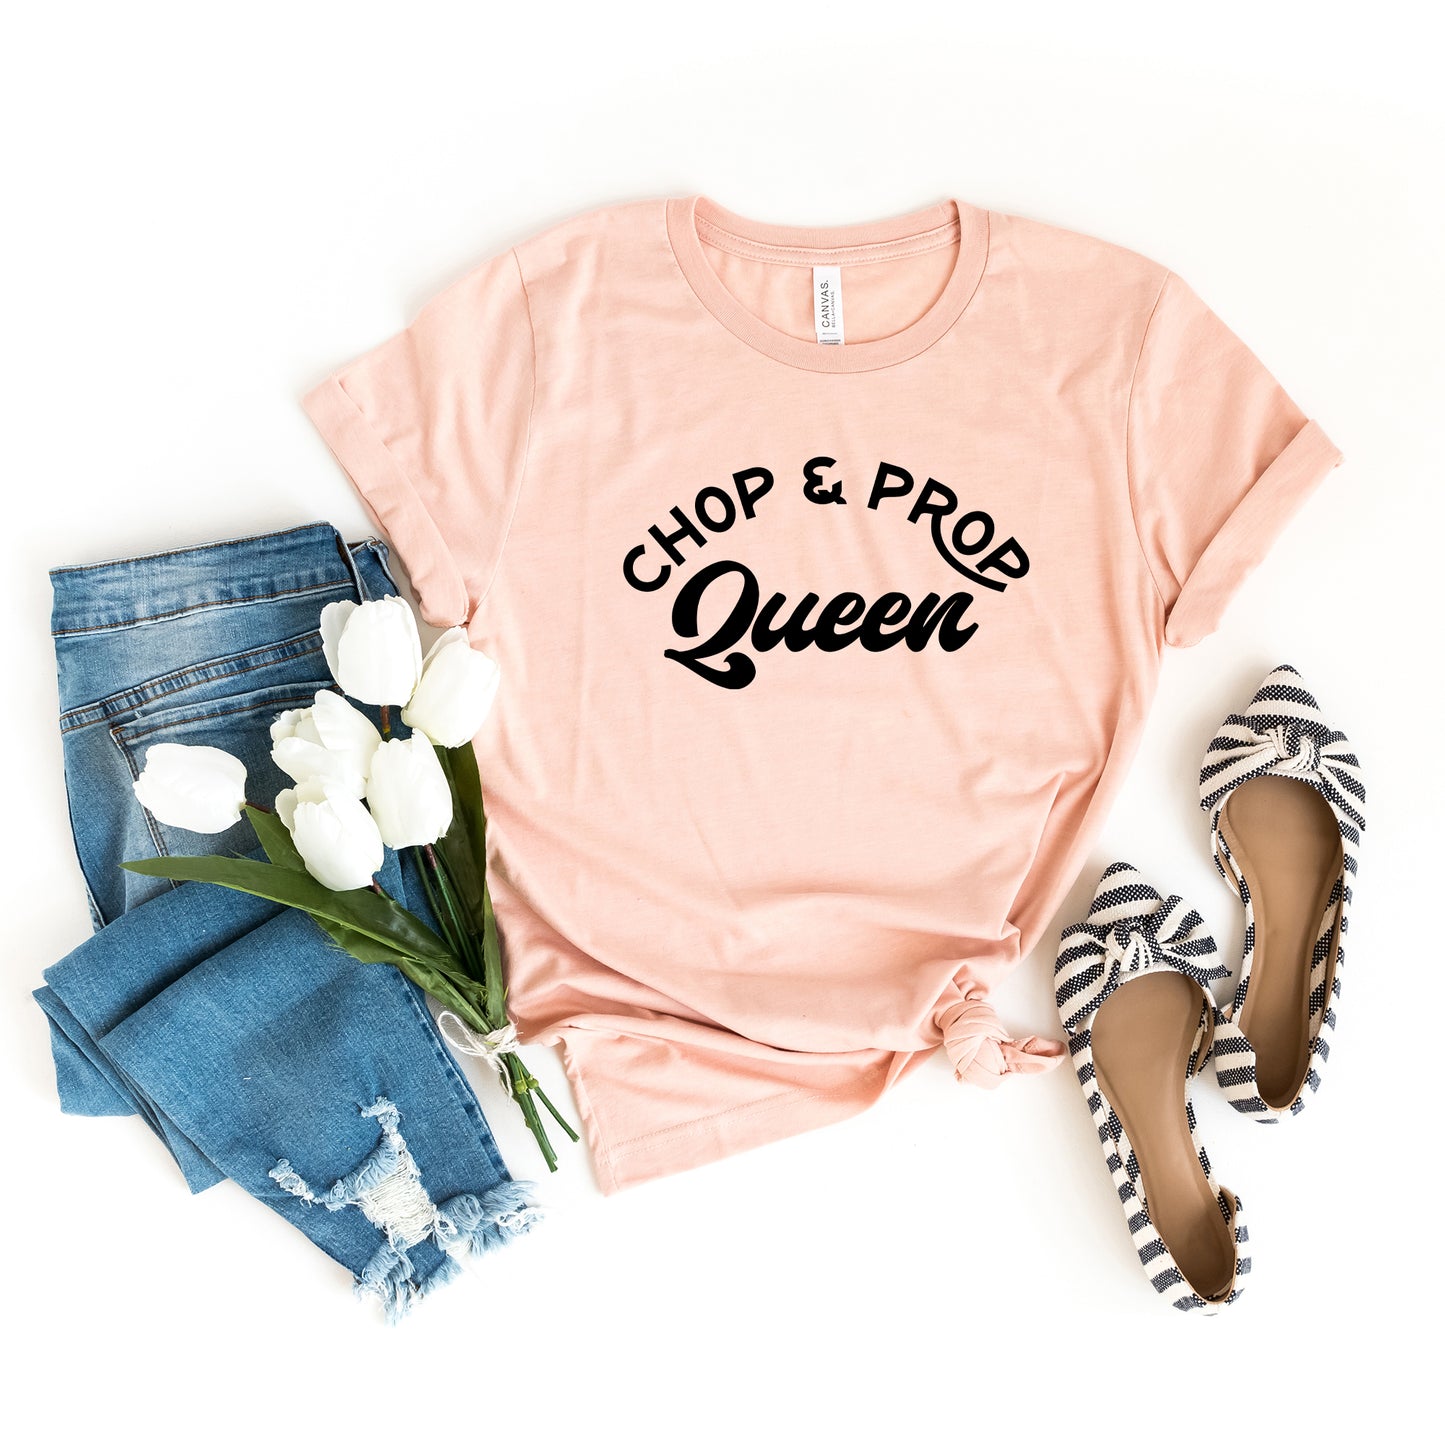 Chop And Prop Queen | Short Sleeve Graphic Tee